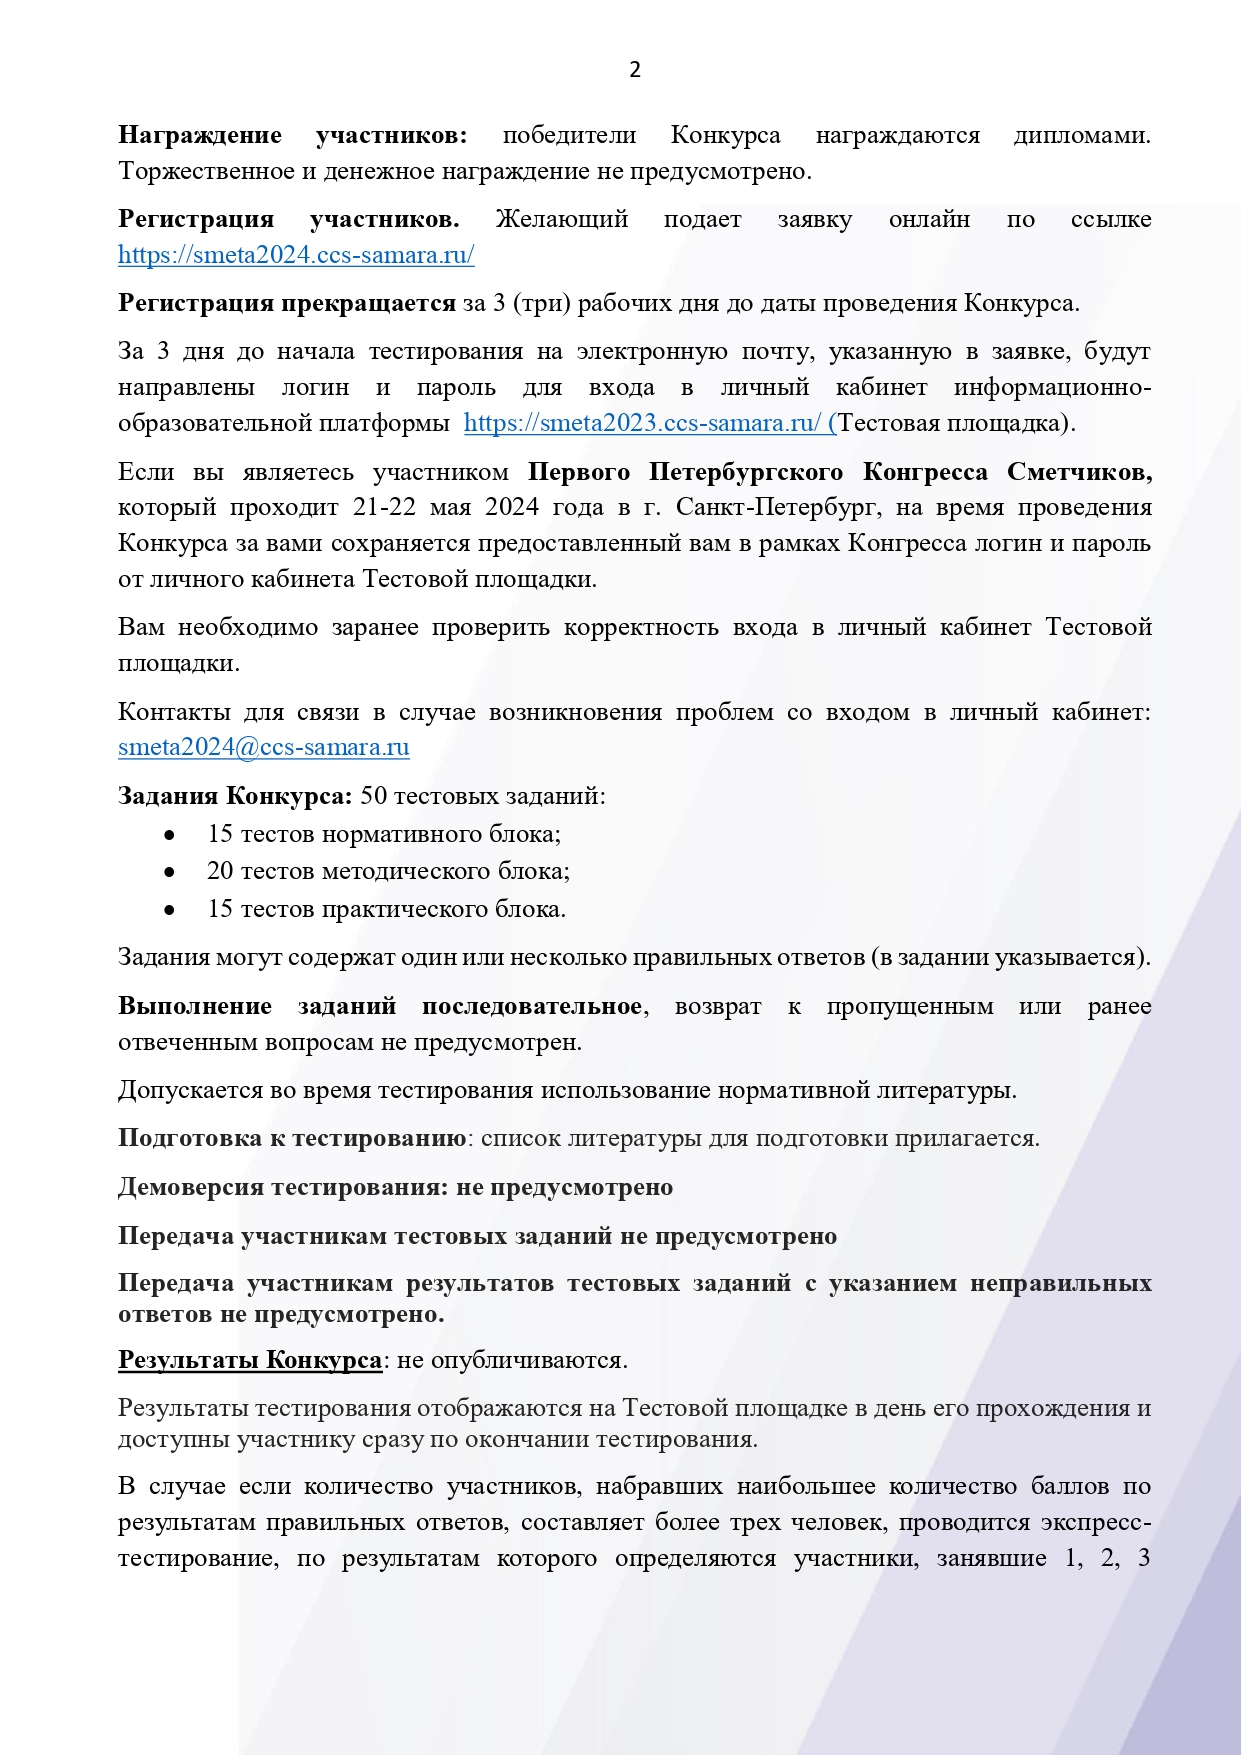 informaciya_po_konkursu_page-0002.jpg